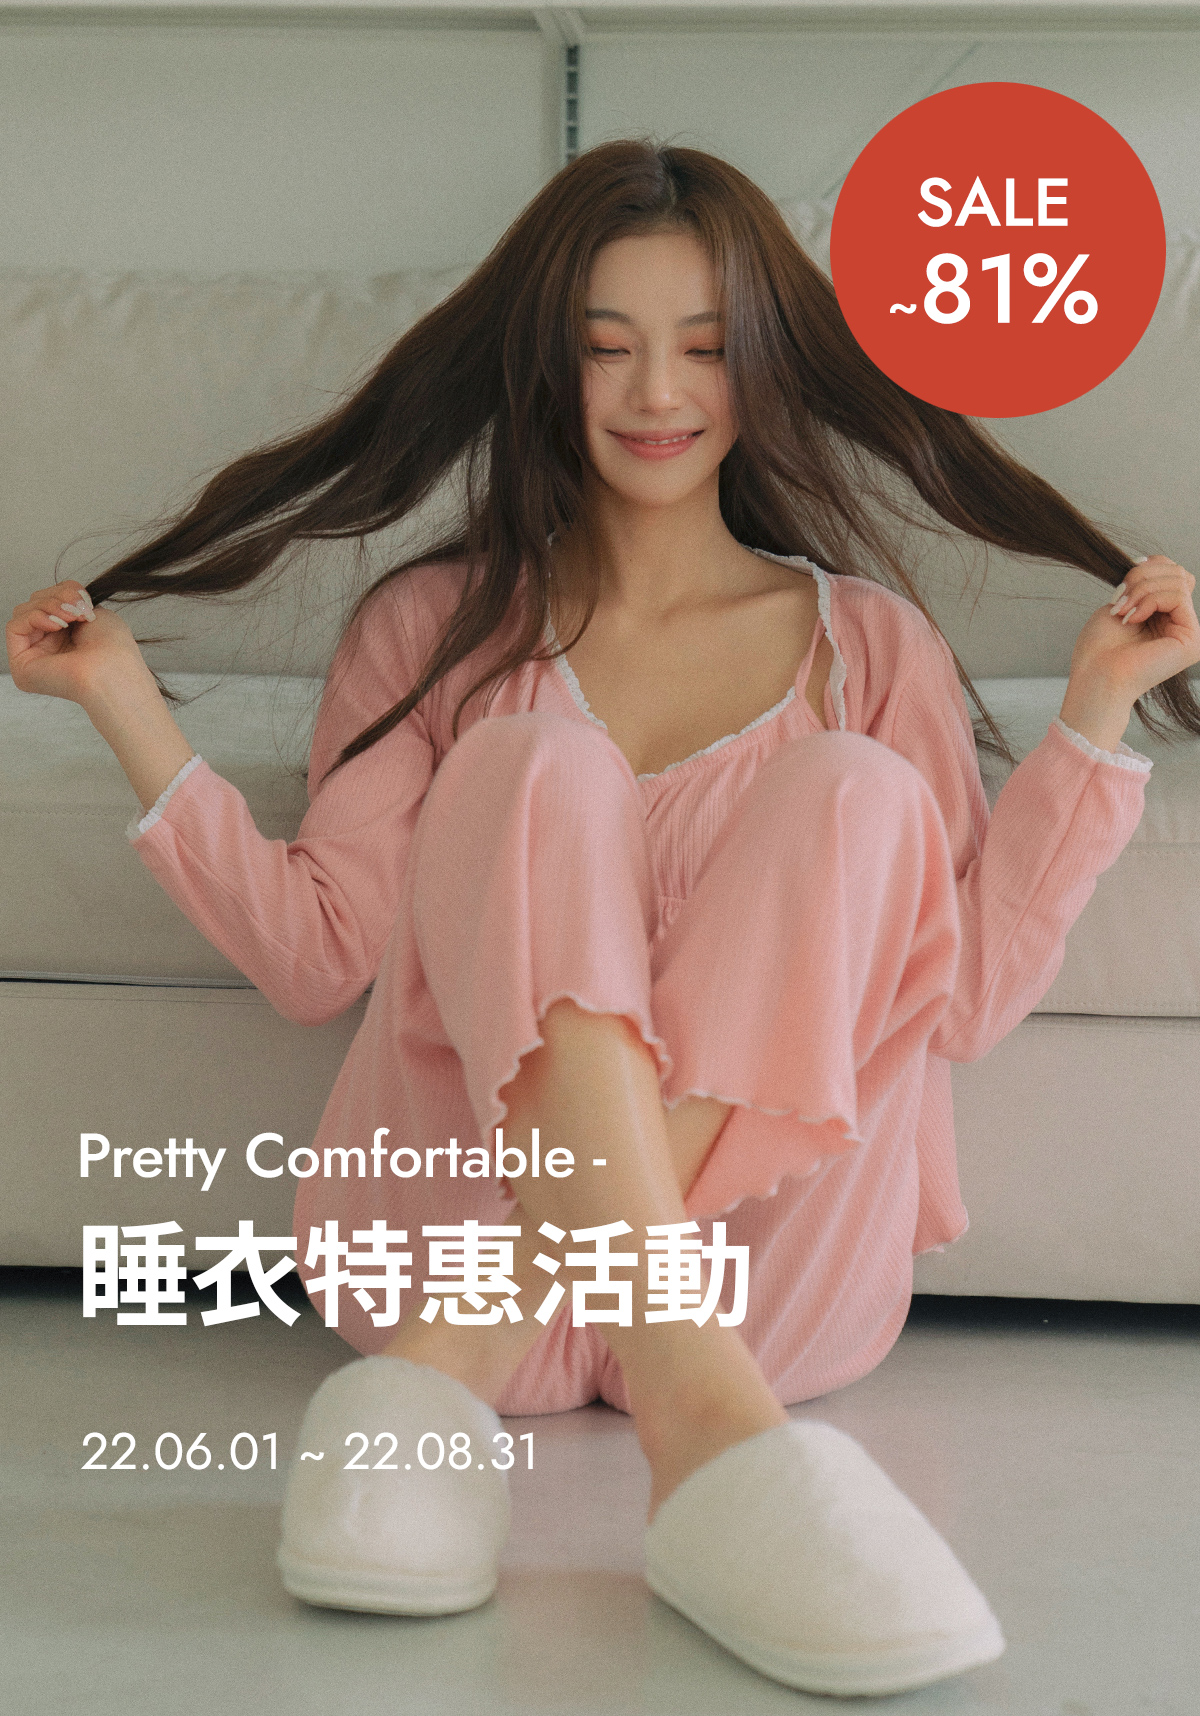 Pretty Comfortable - 睡衣特惠活動 ~81% SALE